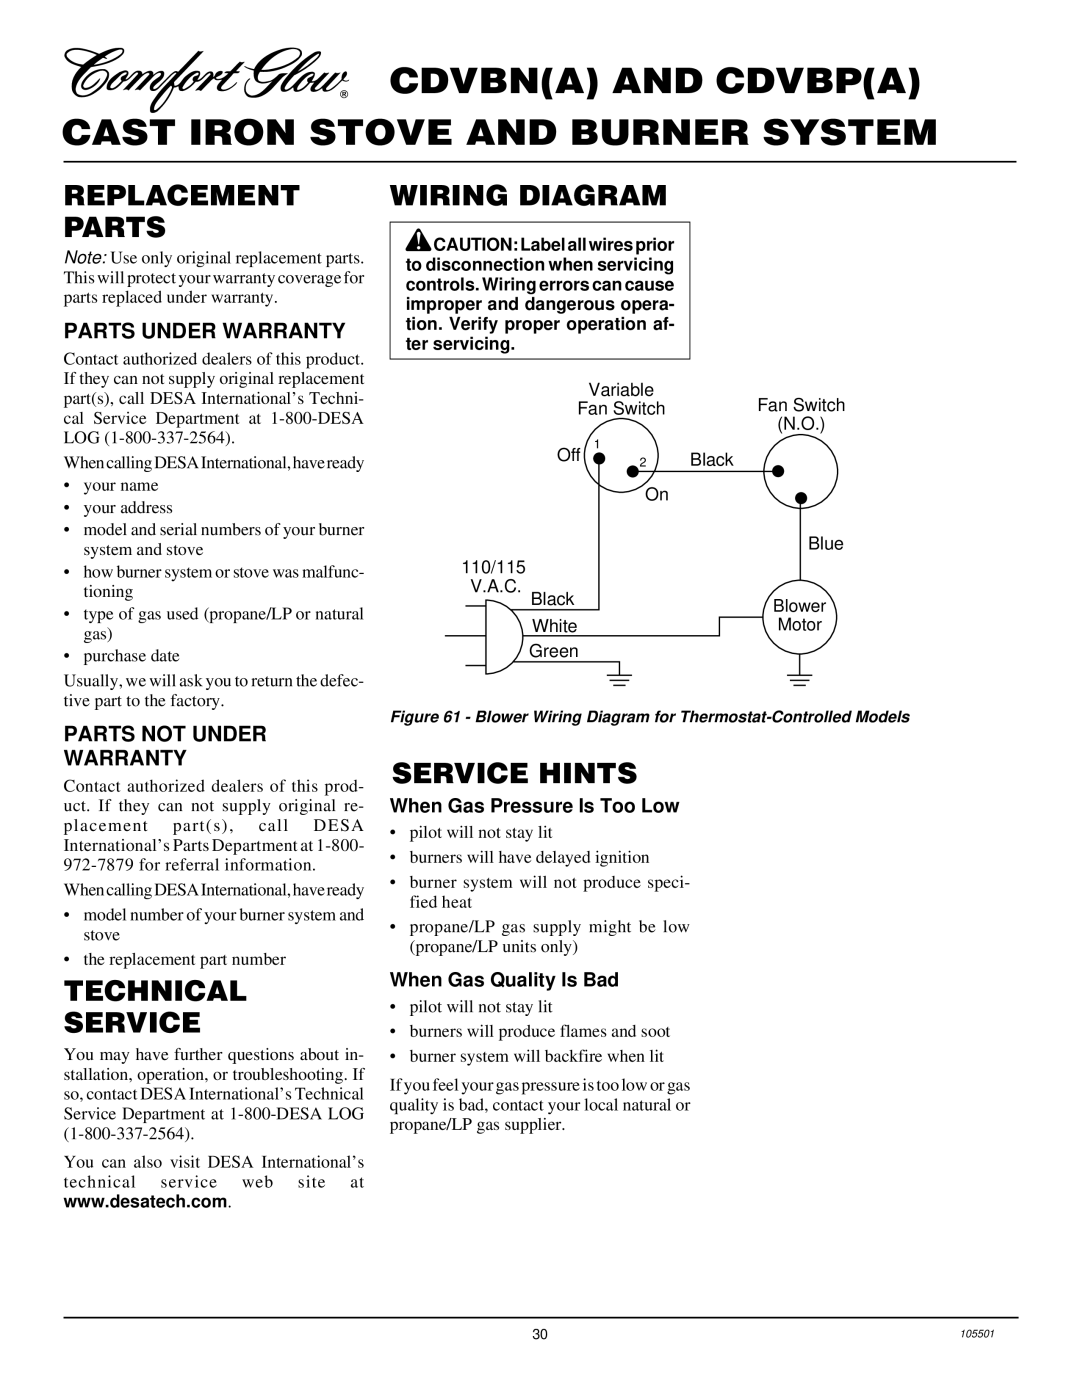 Desa CDVBN(A), CDVBP(A) installation manual Replacement Parts, Wiring Diagram, Service Hints, Technical Service 